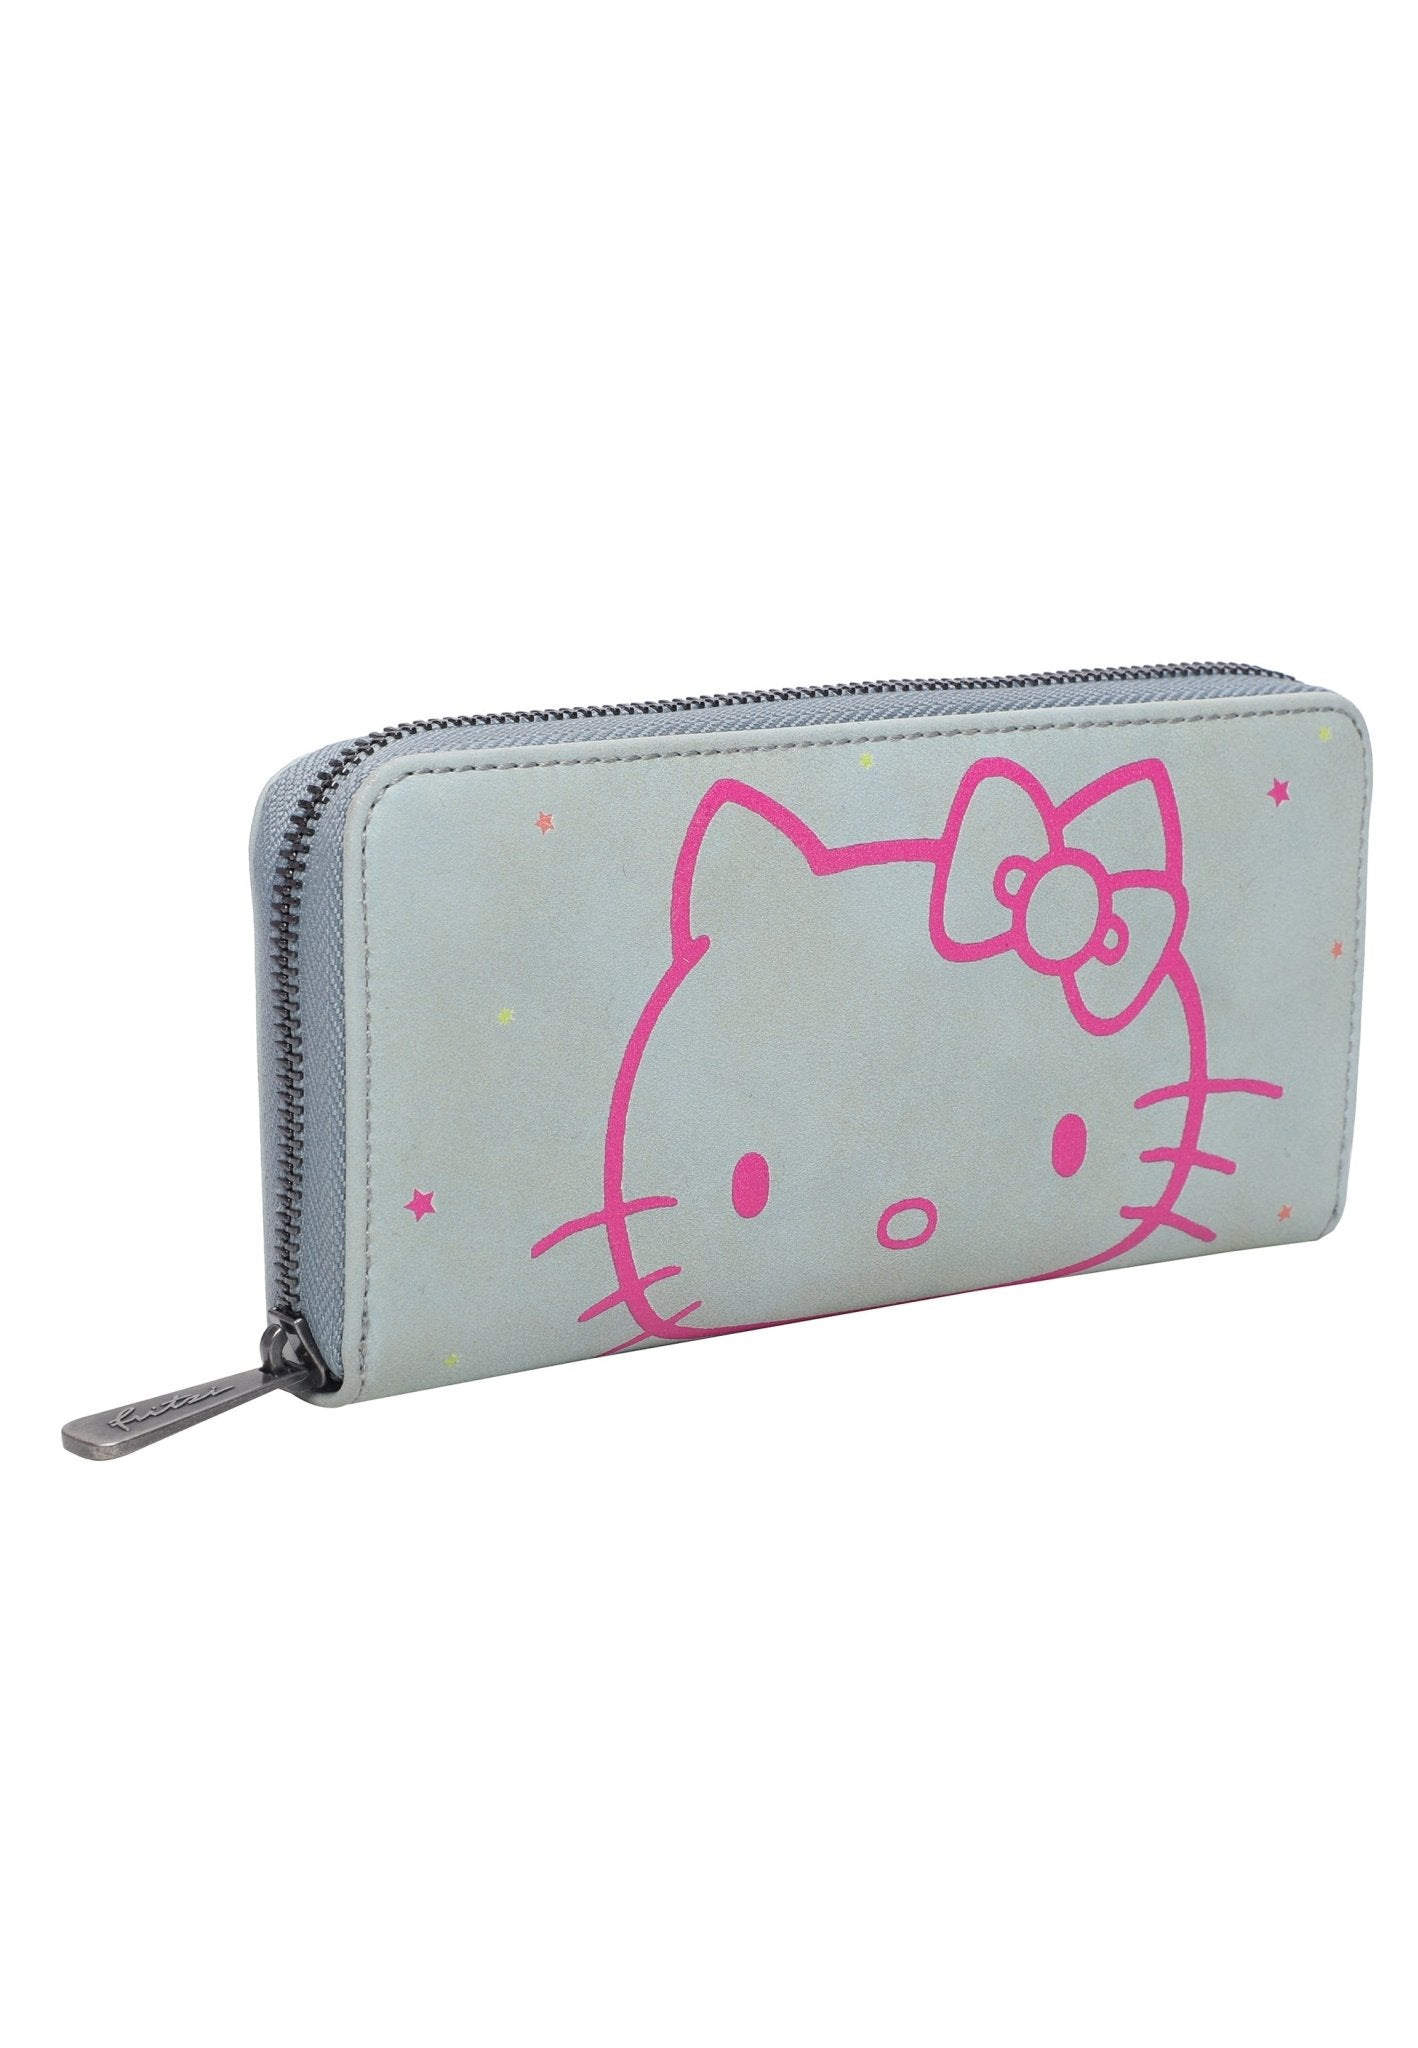 Hello Kitty fritzi limited Wallet - Fritzi aus Preußen - Kitty Blue